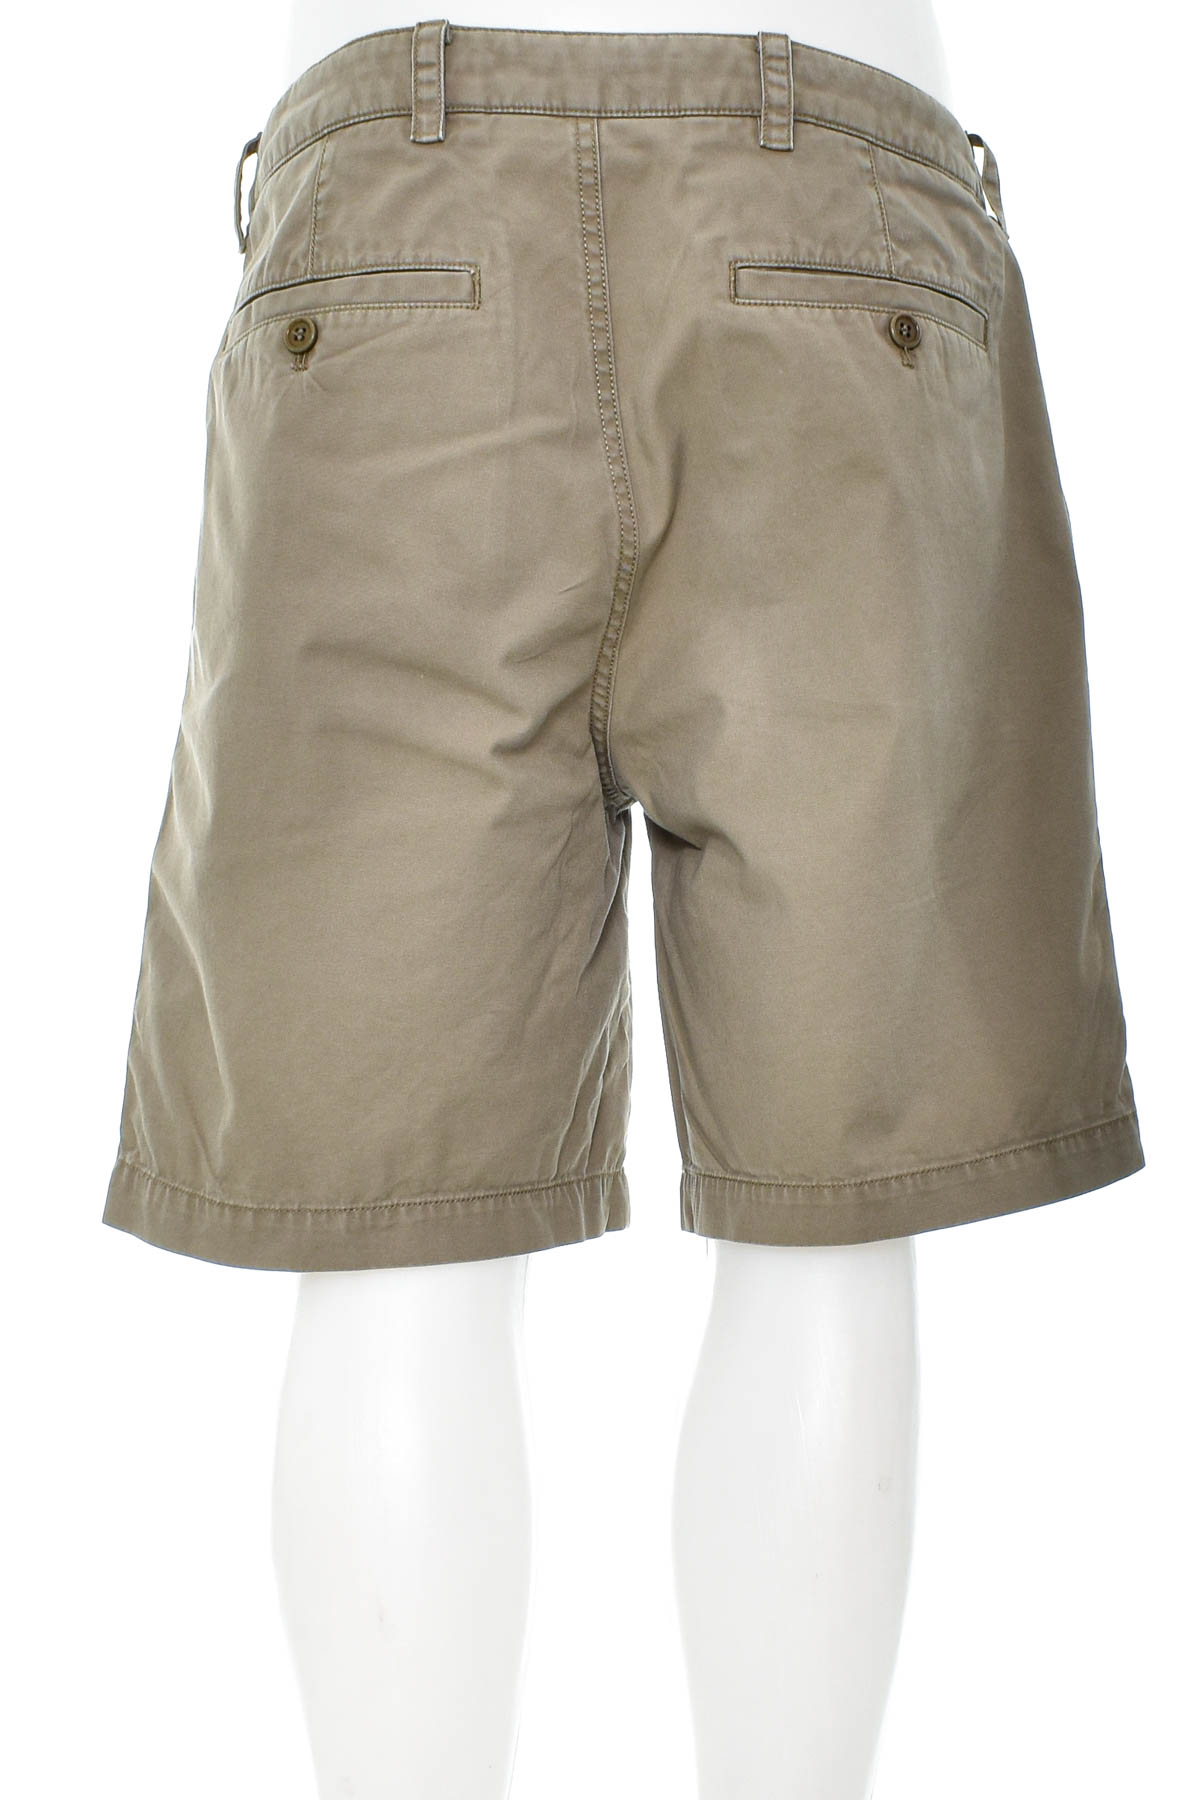 Men's shorts - ARKET - 1